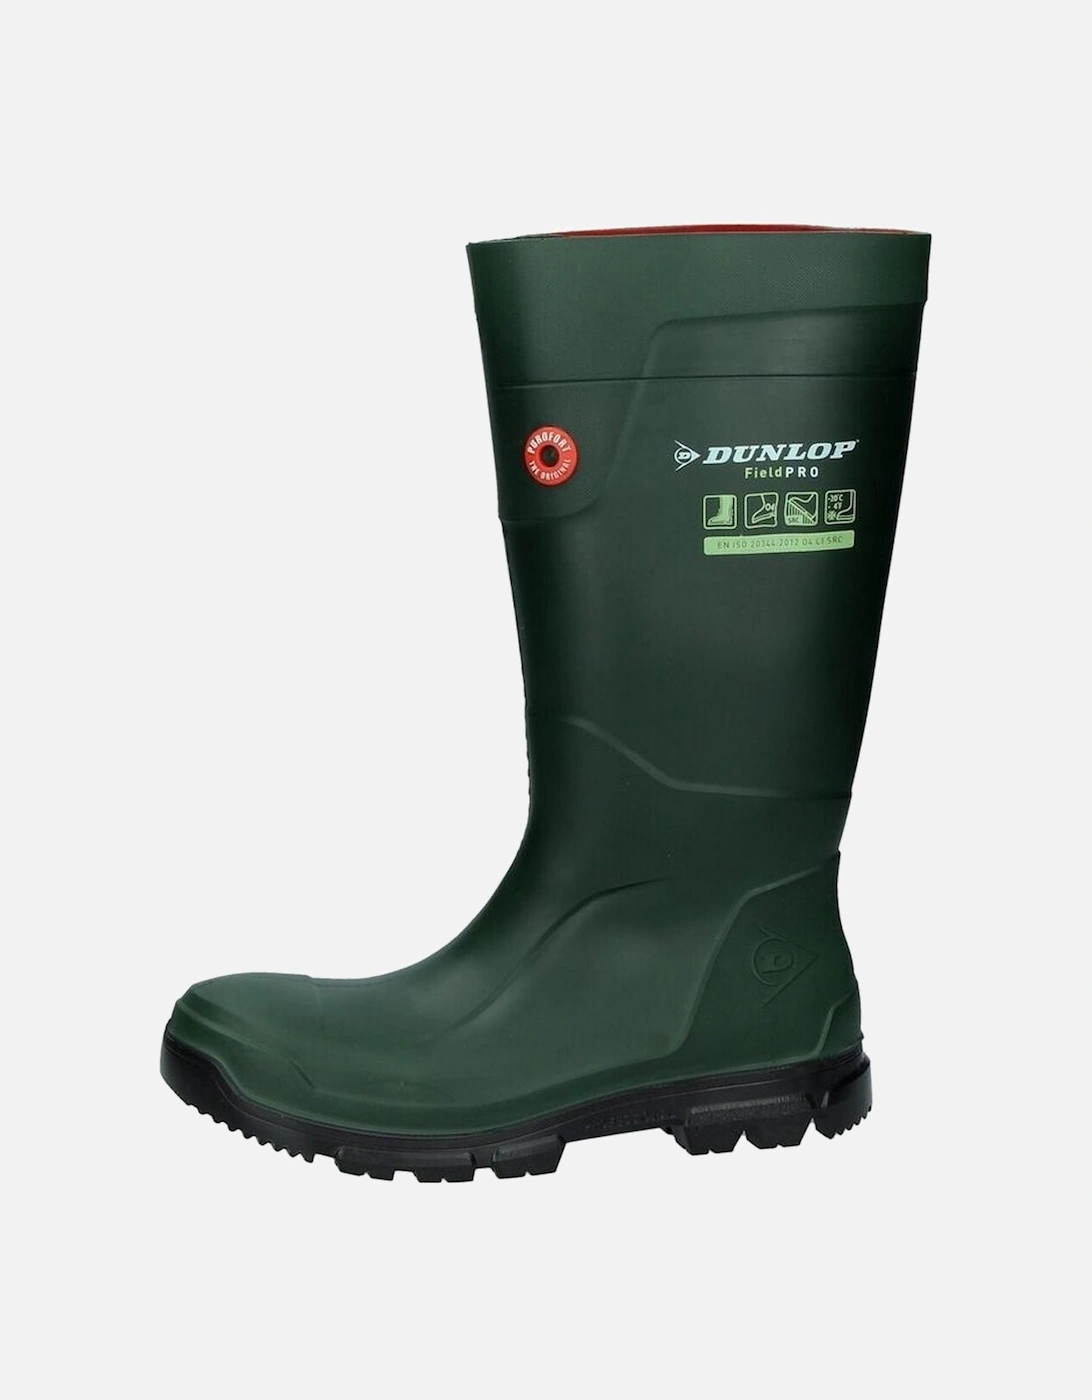 Unisex Adult Purofort Field Pro Wellington Boots